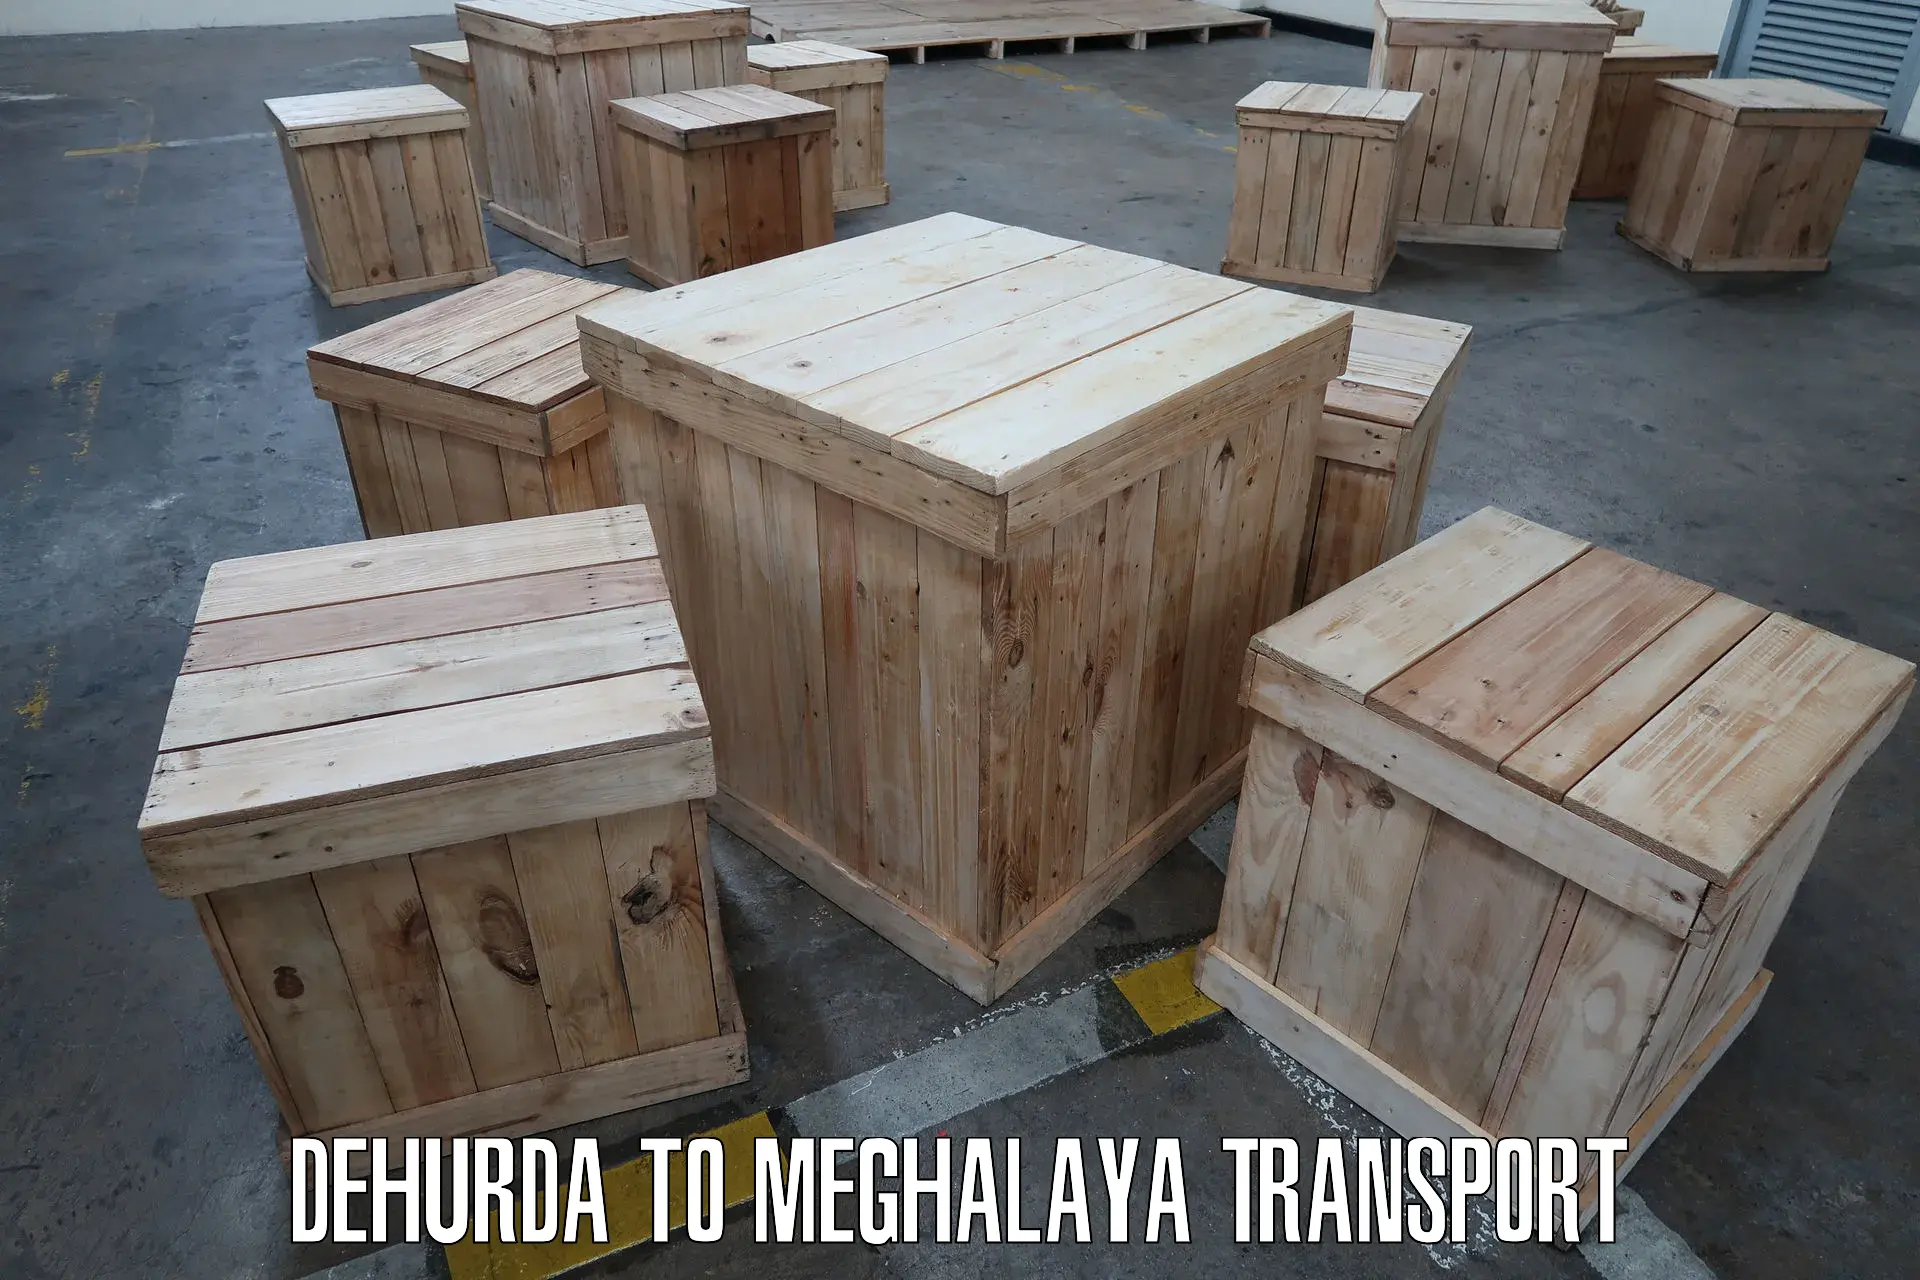 Truck transport companies in India Dehurda to Shillong